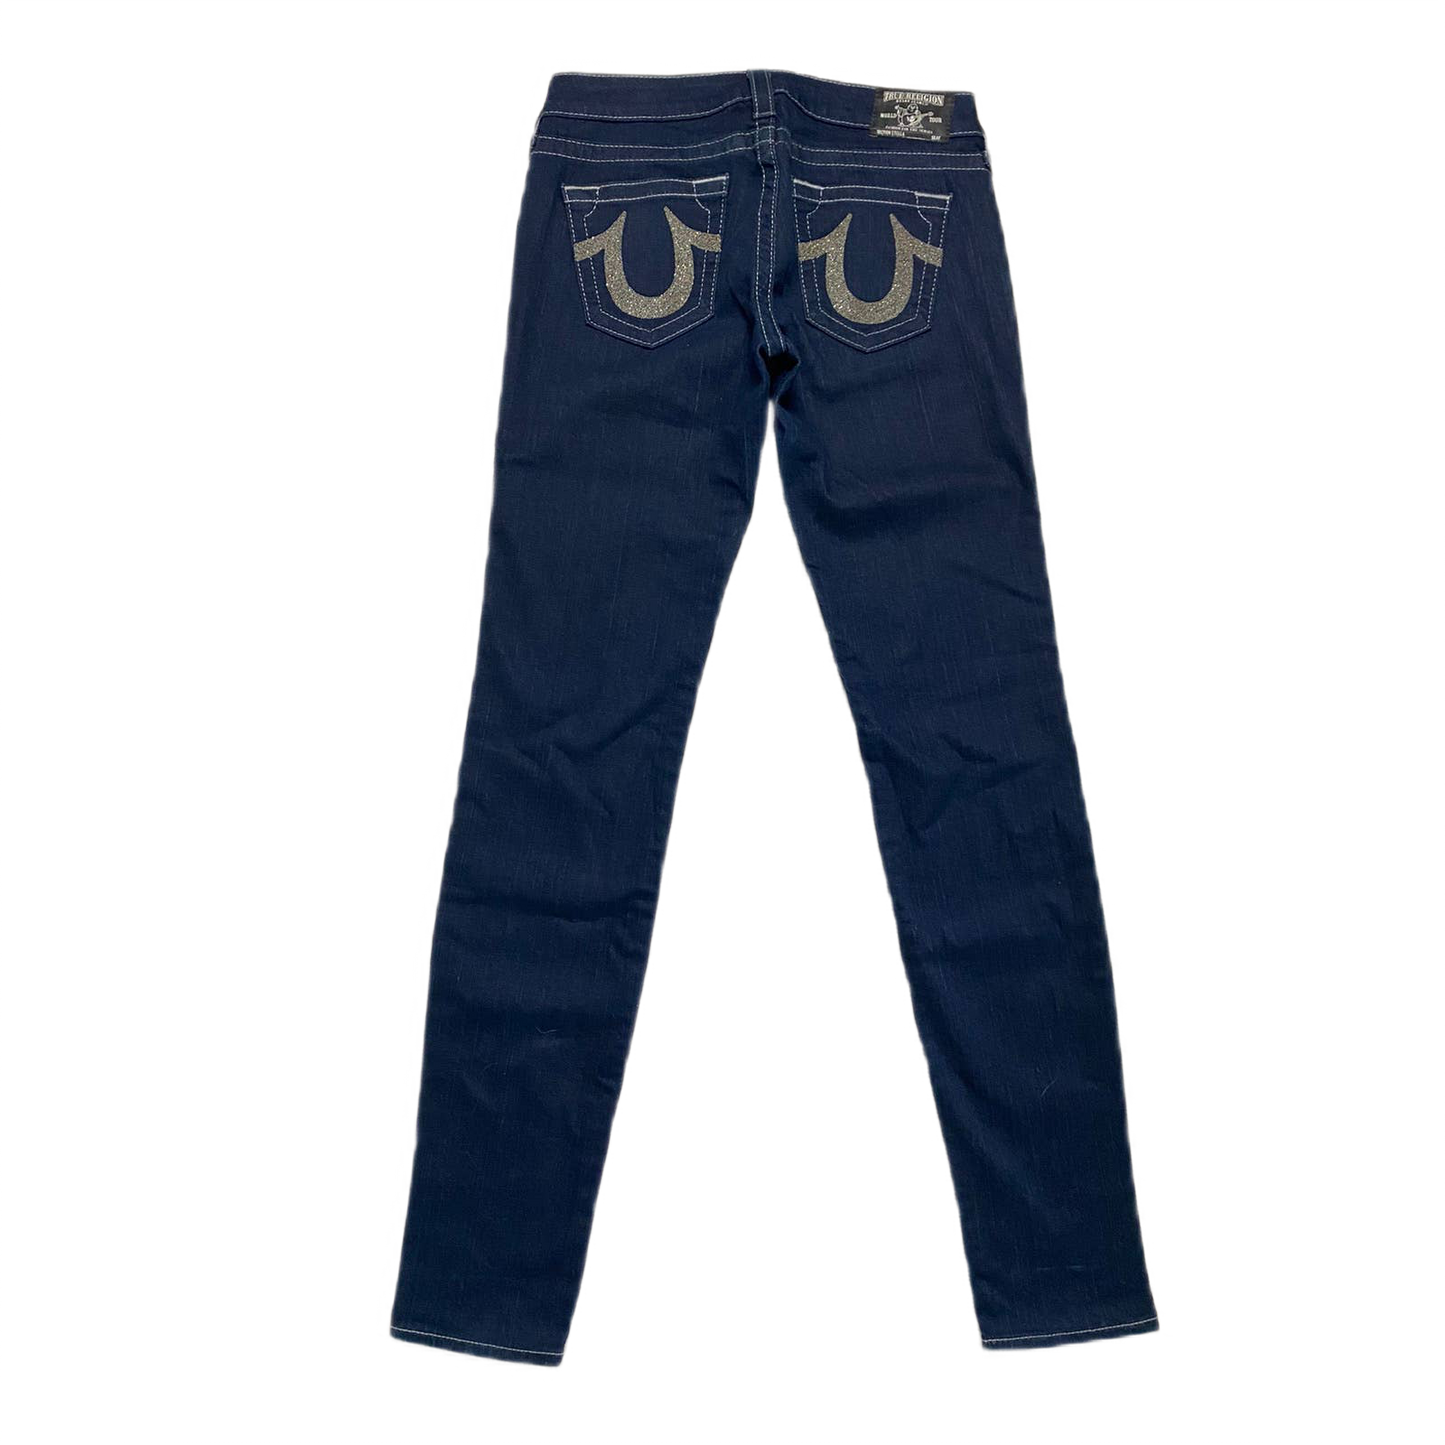 True Religion vintage navy jeans gem stones logo Y2K